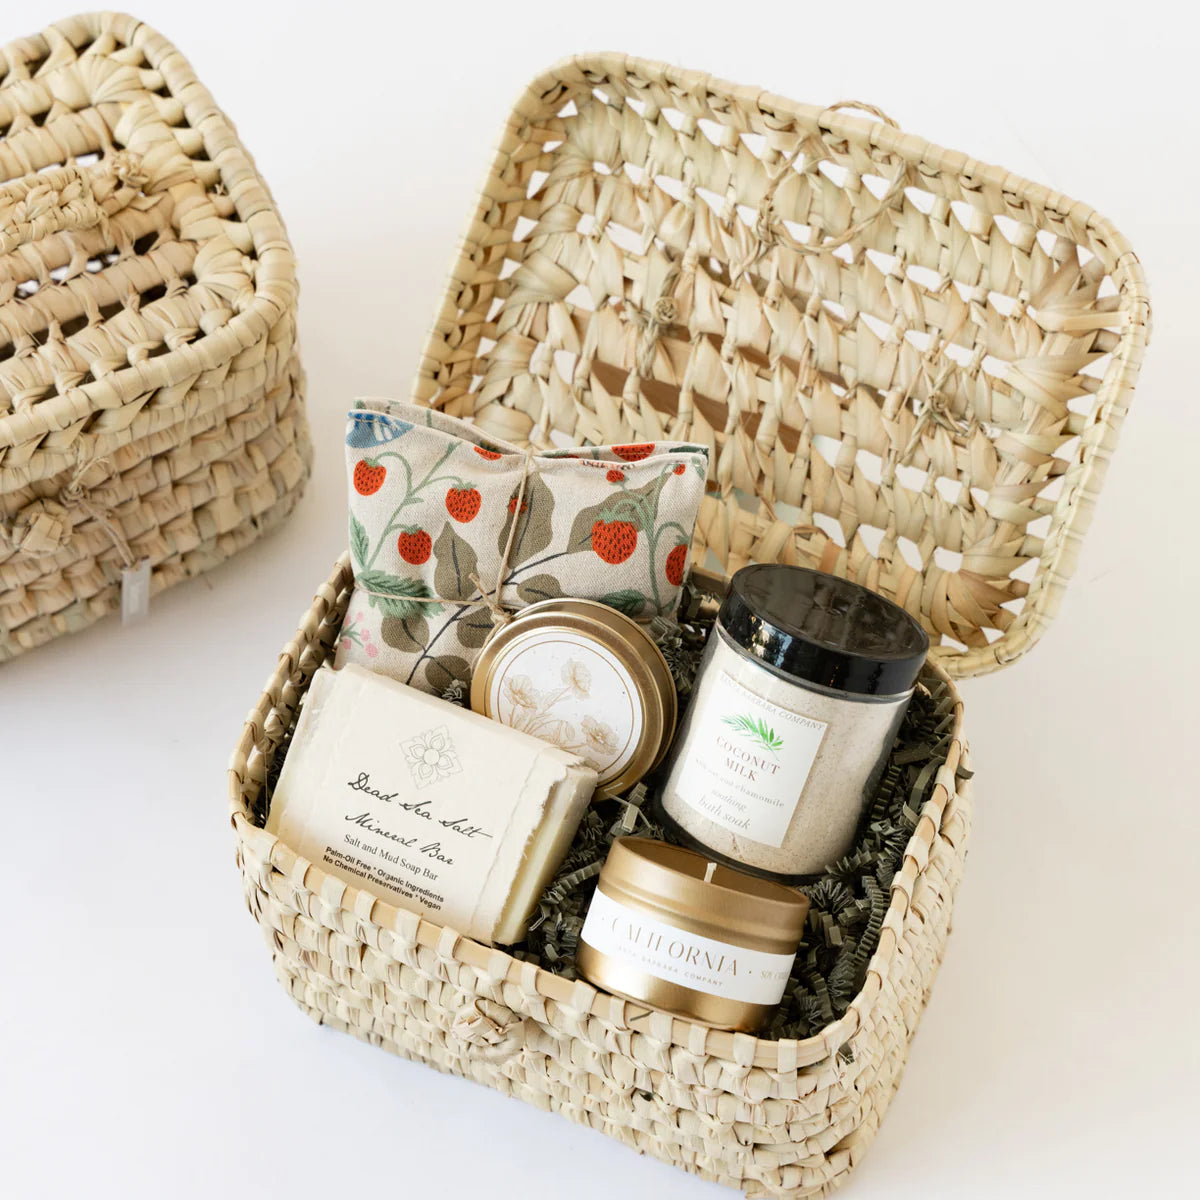 Golden sun gift basket in reusable basket